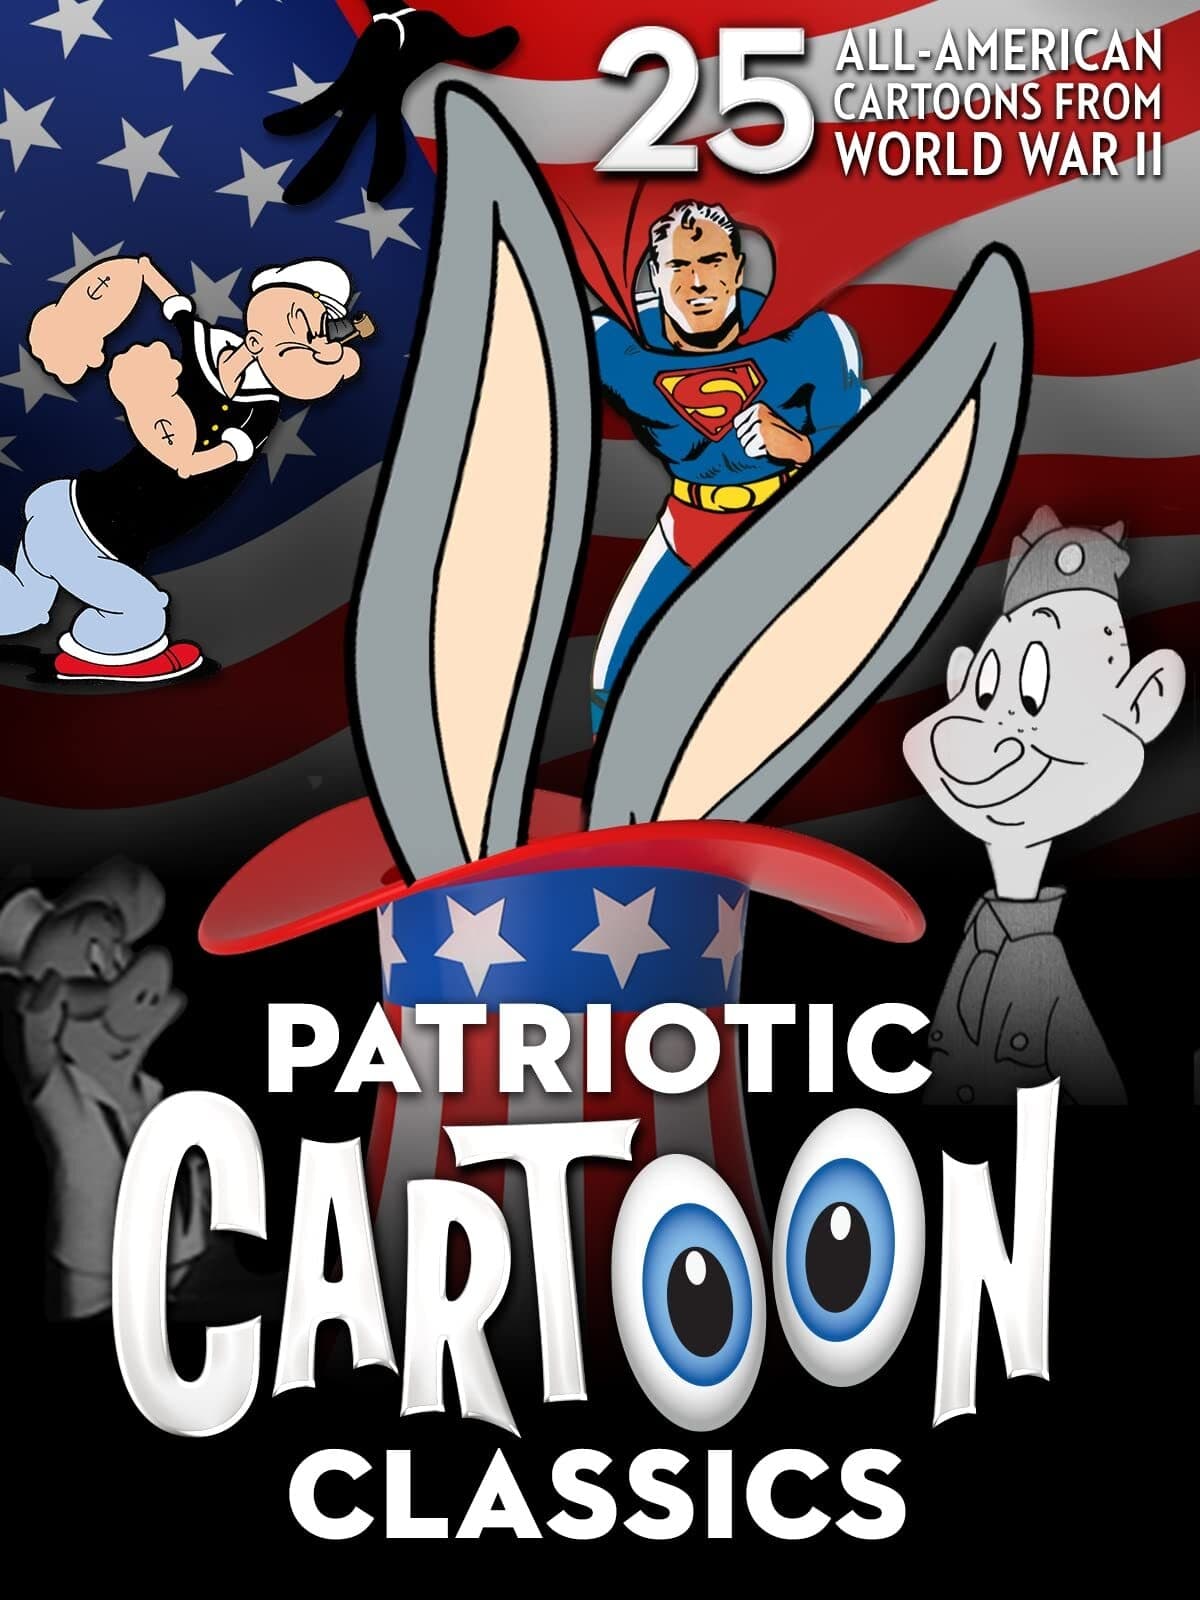 Patriotic Cartoon Classics: 25 All-American Cartoons from World War II (2017)